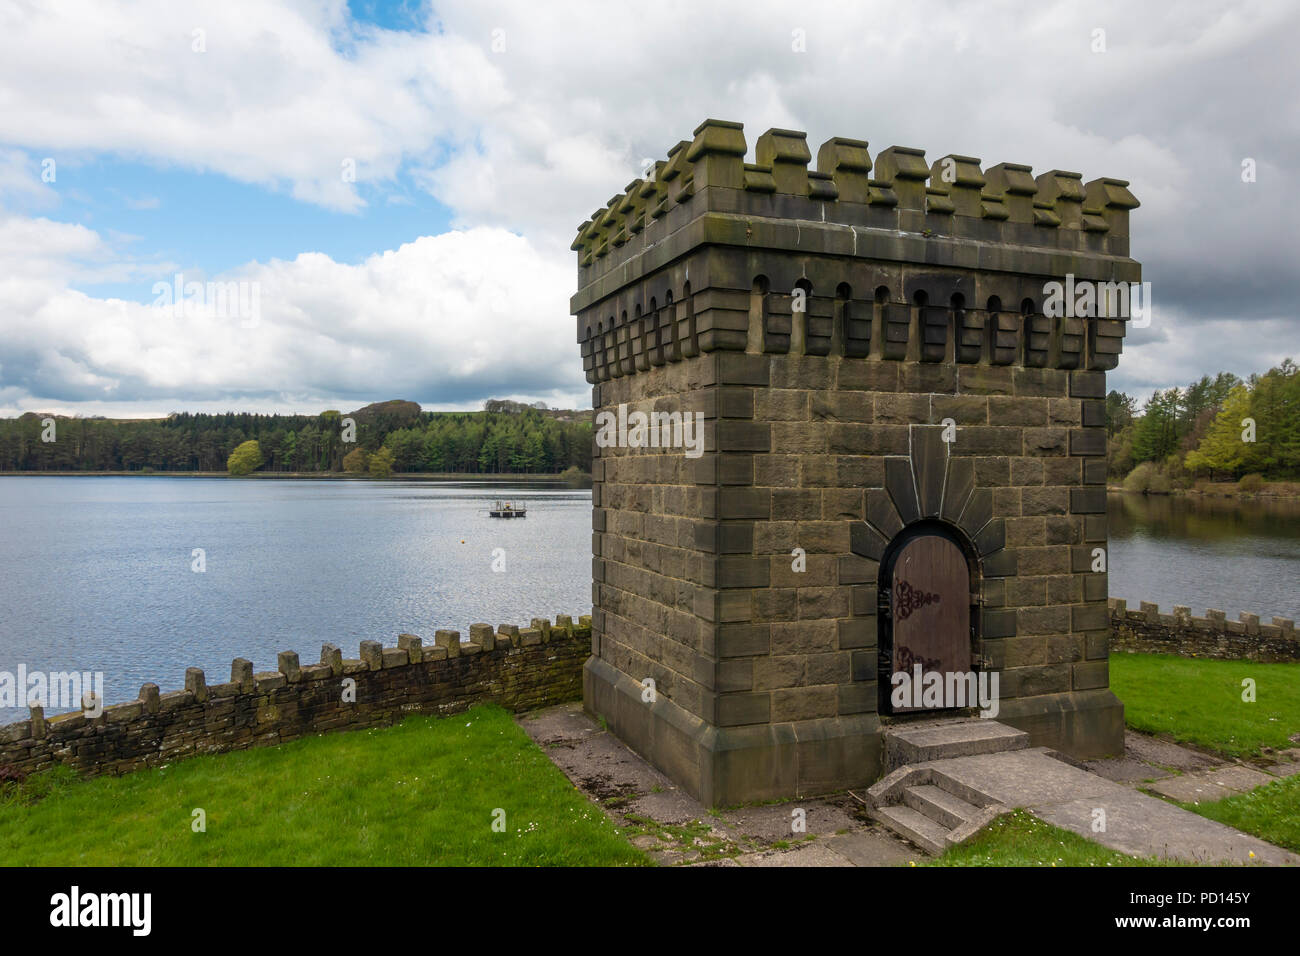 Tower at Entwistle reservoir in Edgeworth, Bolton, Lancashire, England. Stock Photo